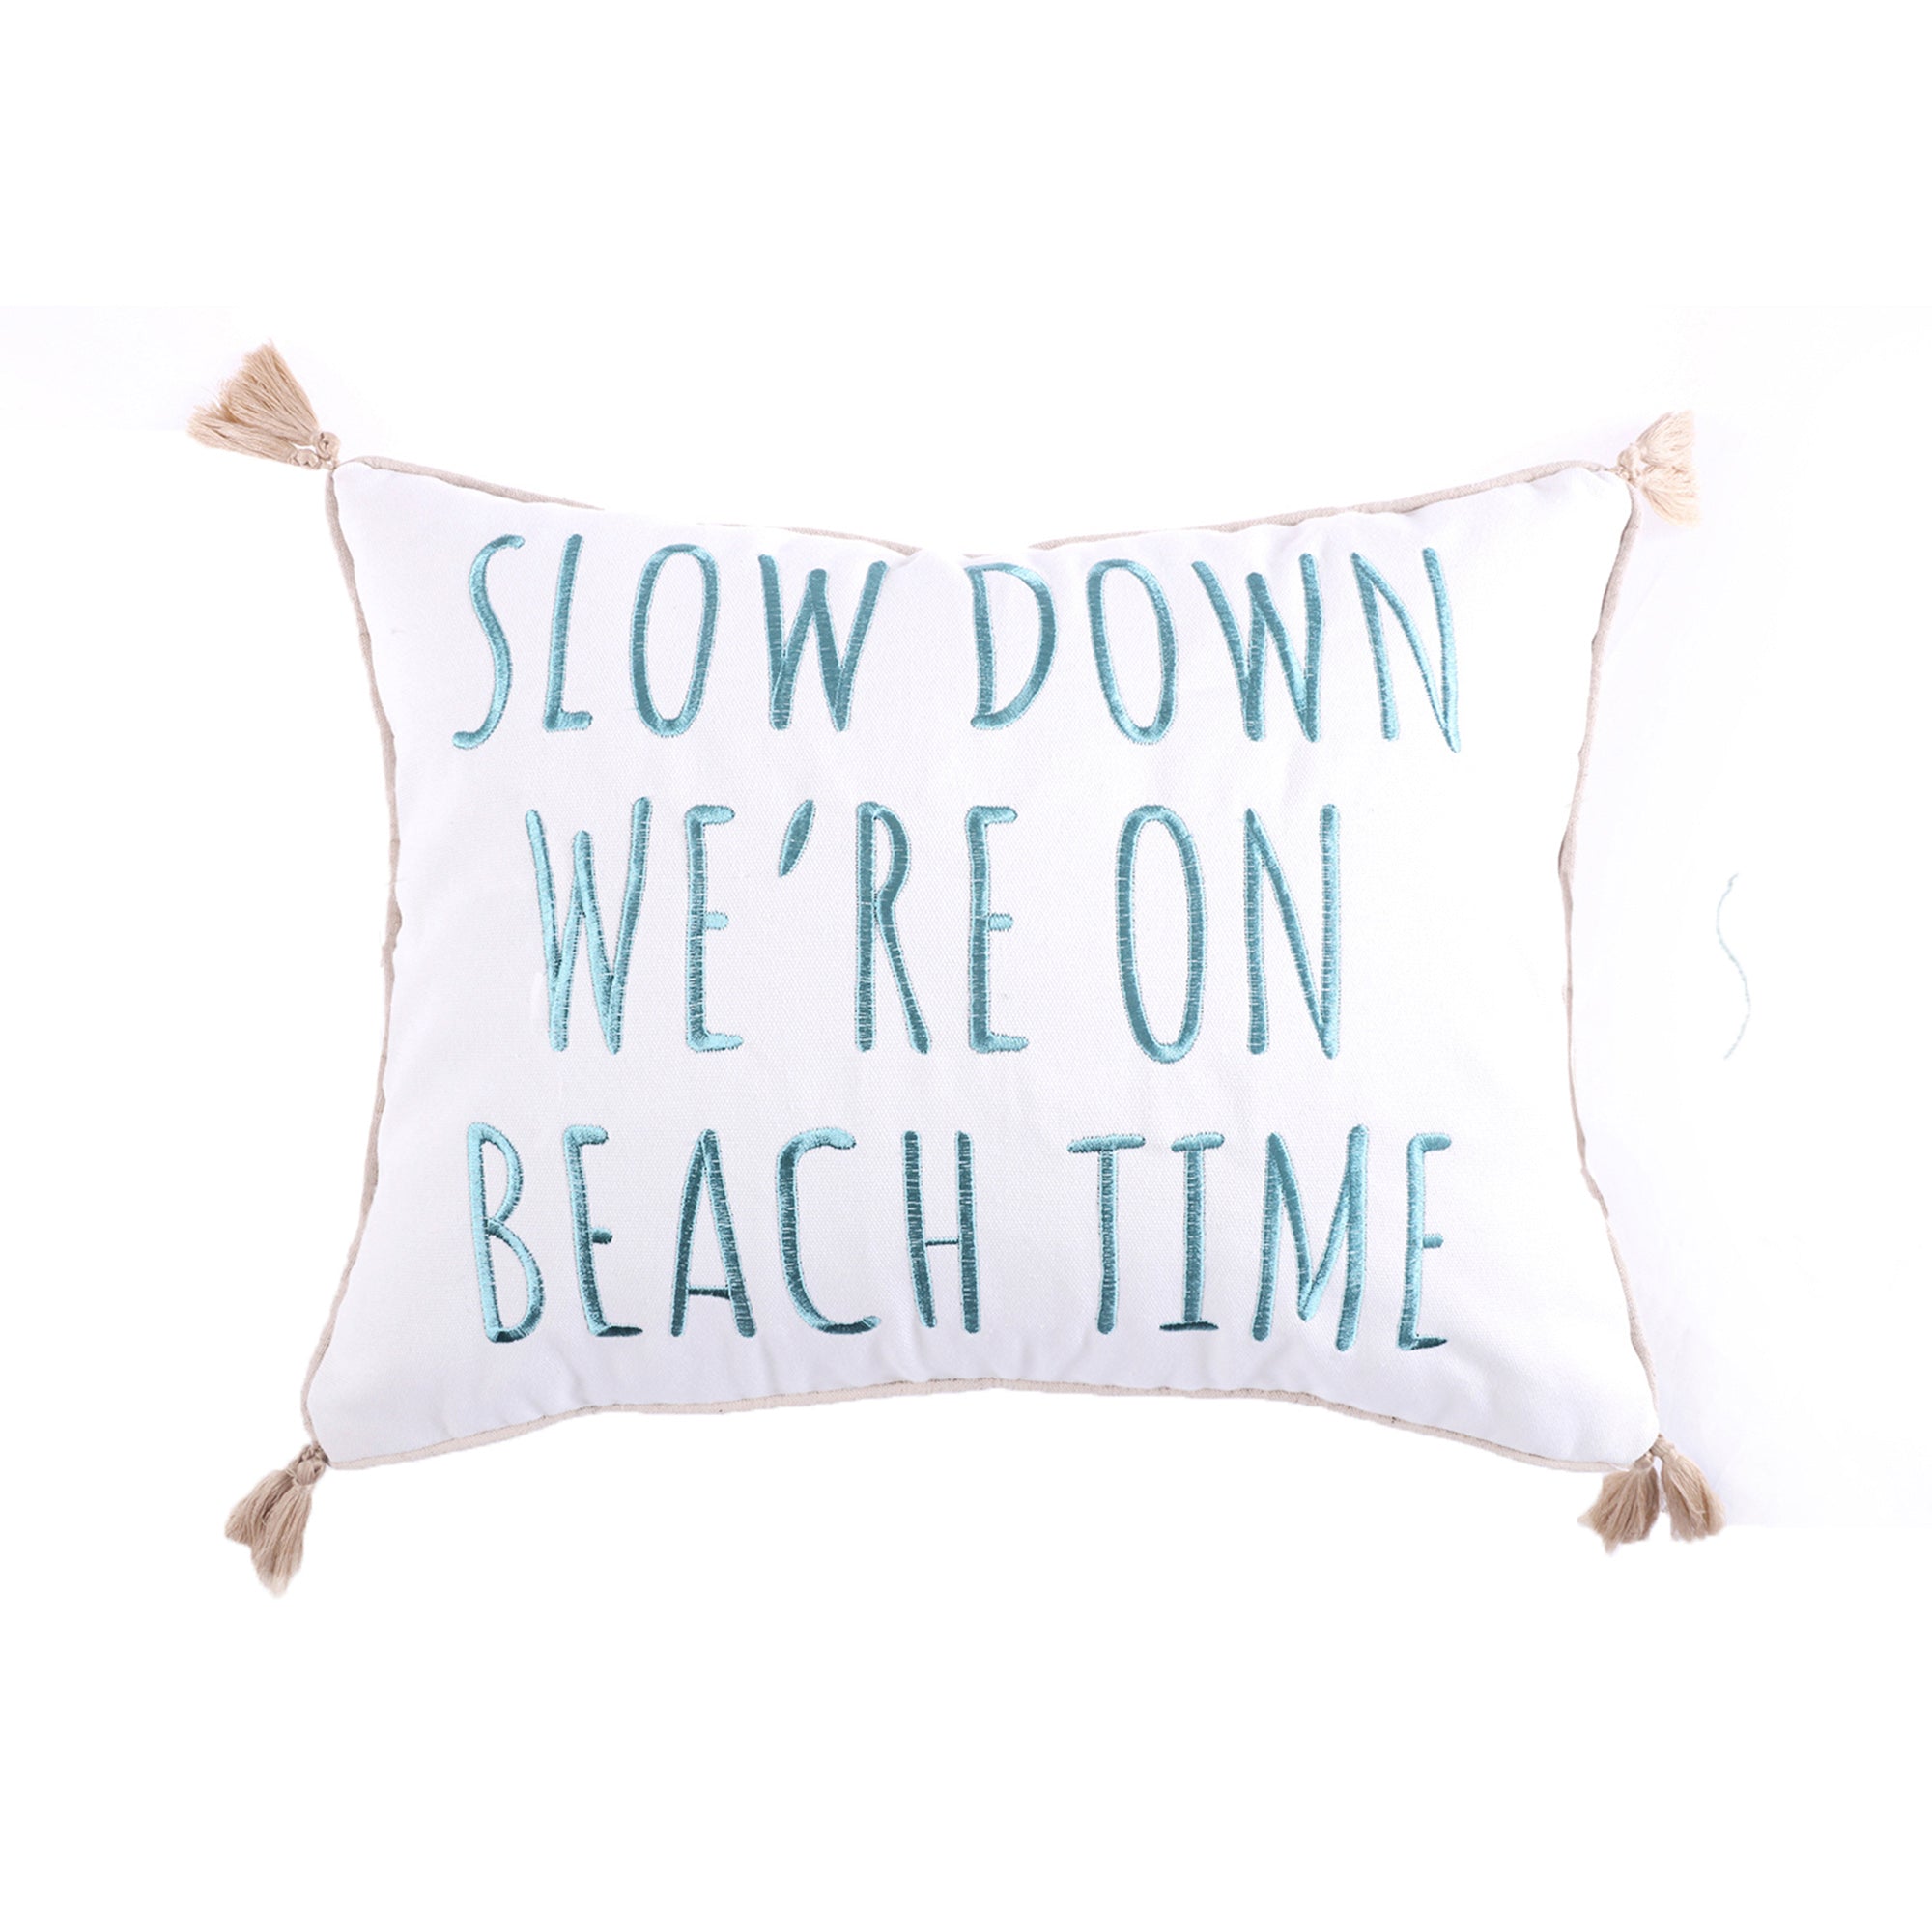 Stone Harbor Beach Time Pillow